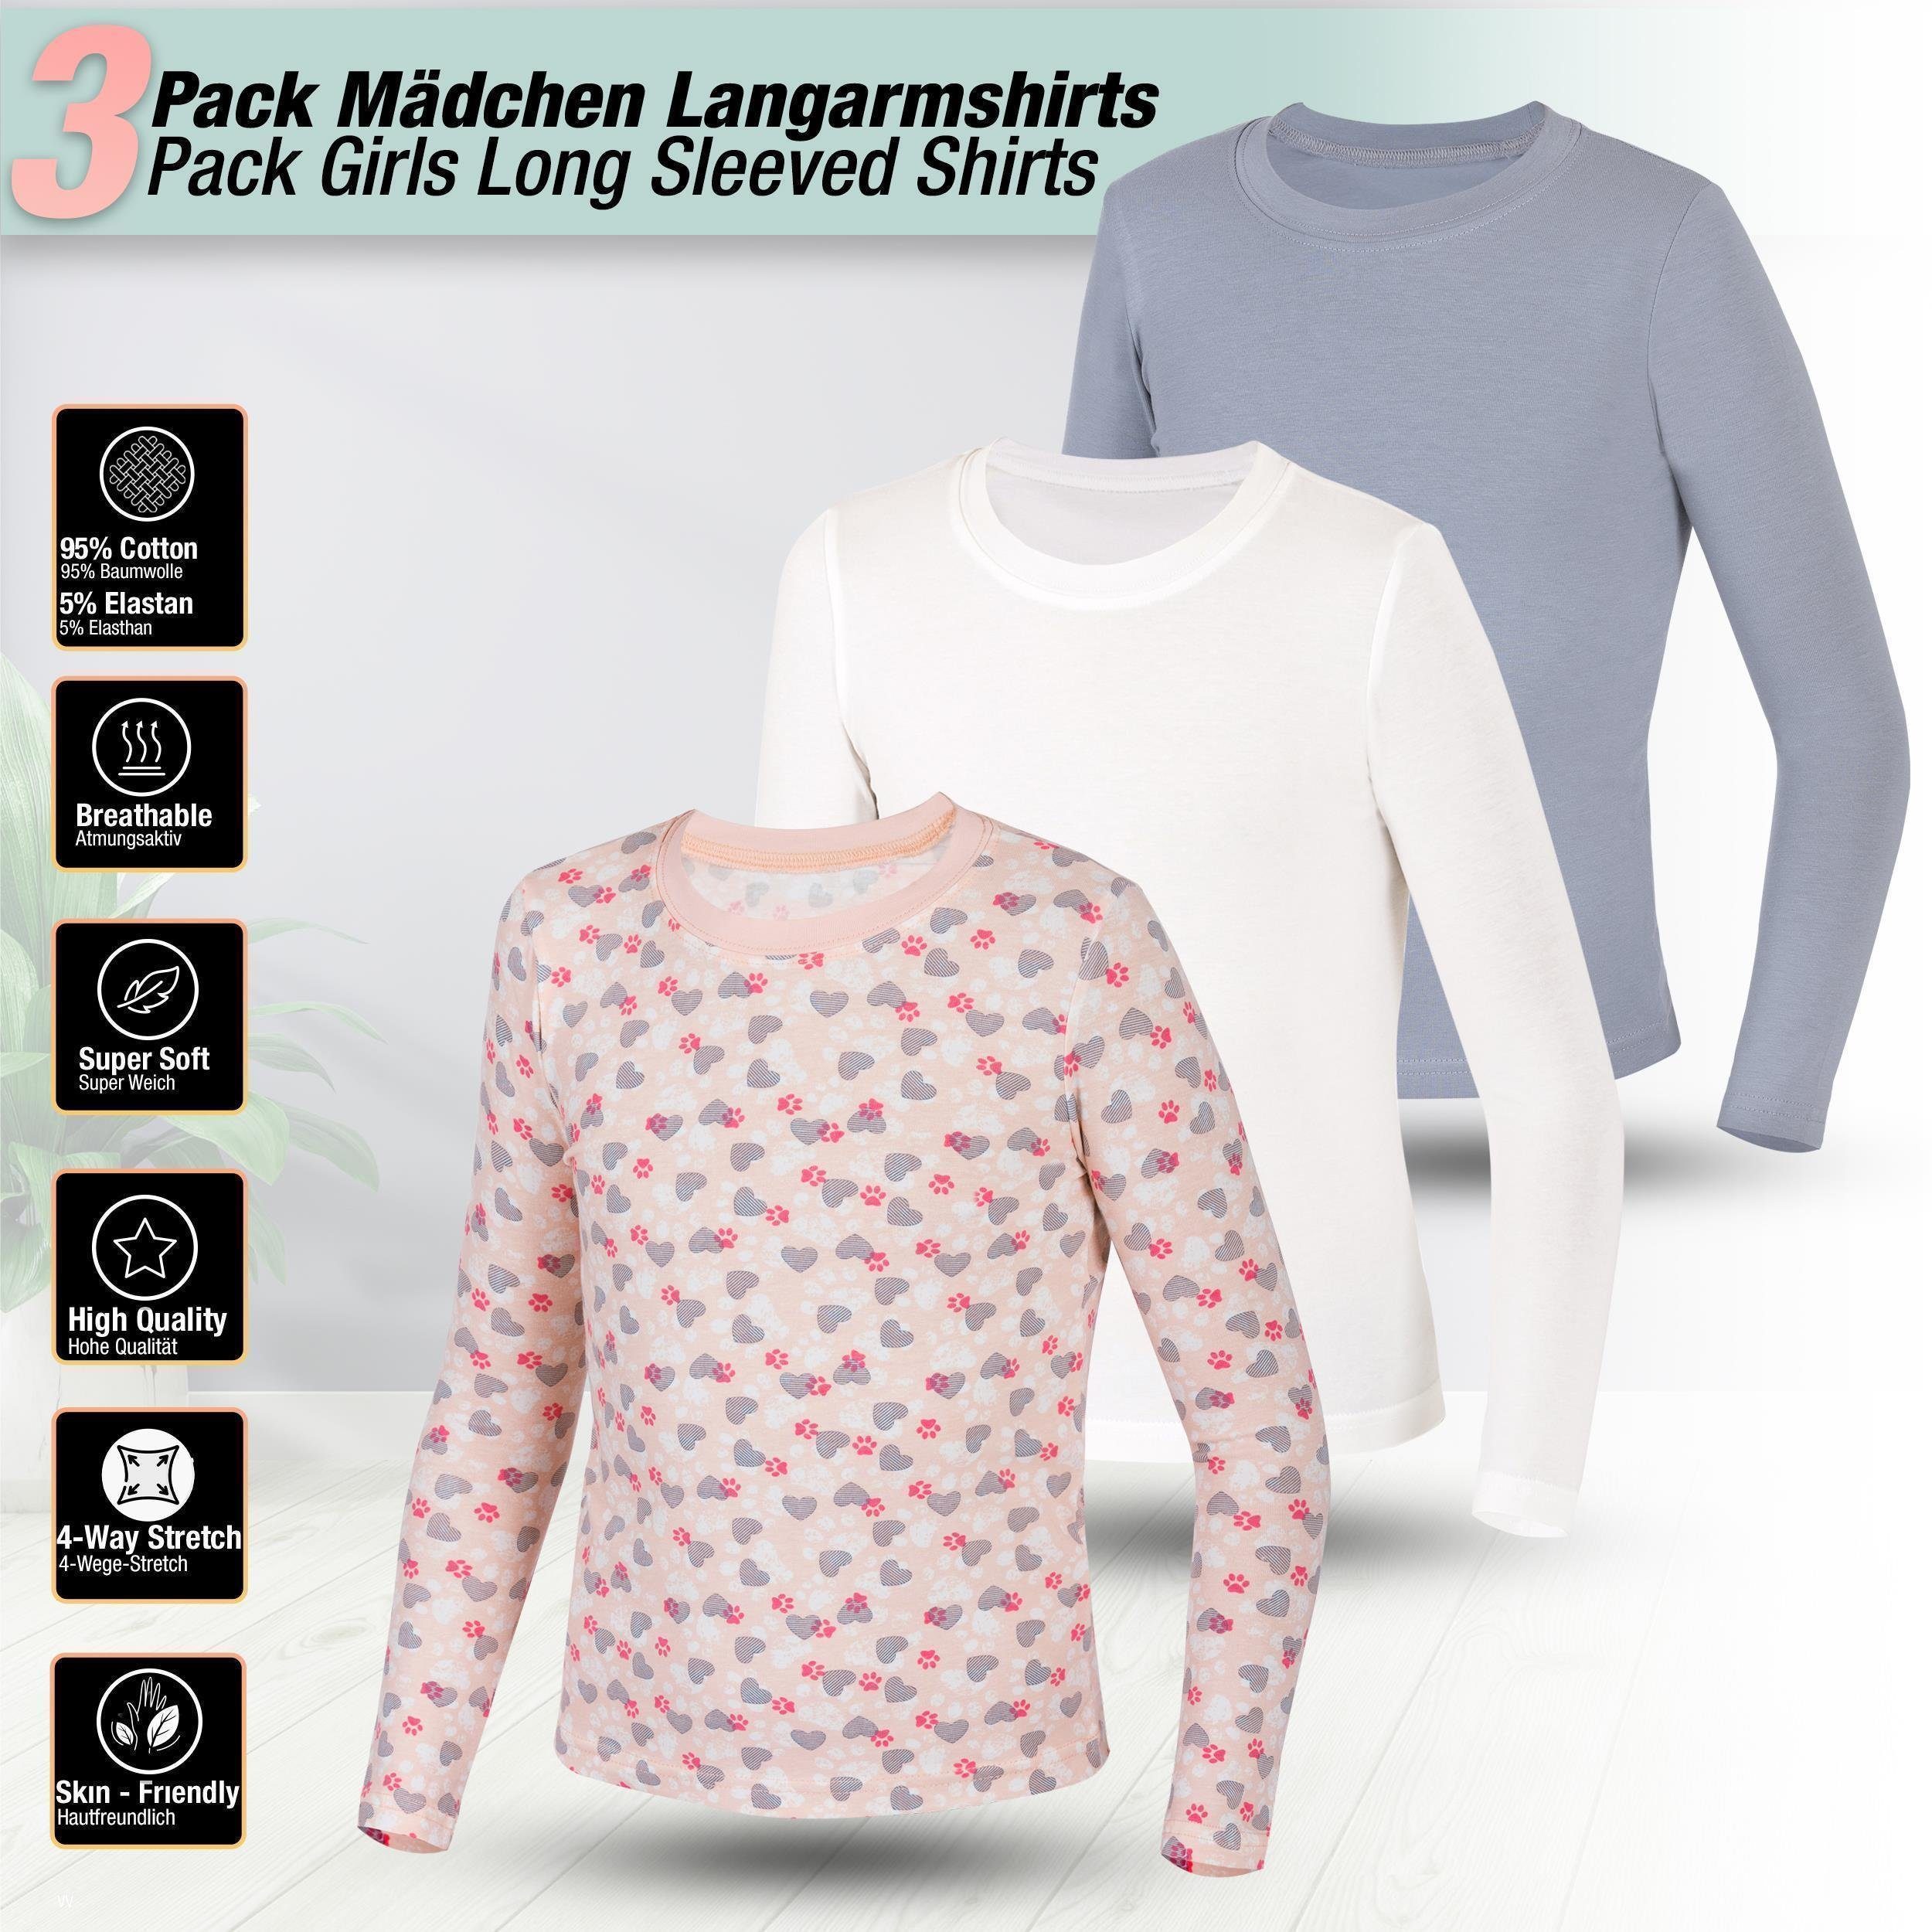 LOREZA Unterhemd 3er Pack Kinder Body 3-St) Unterhemden Langarmshirts Variante Shirt 3 Mädchen (Set